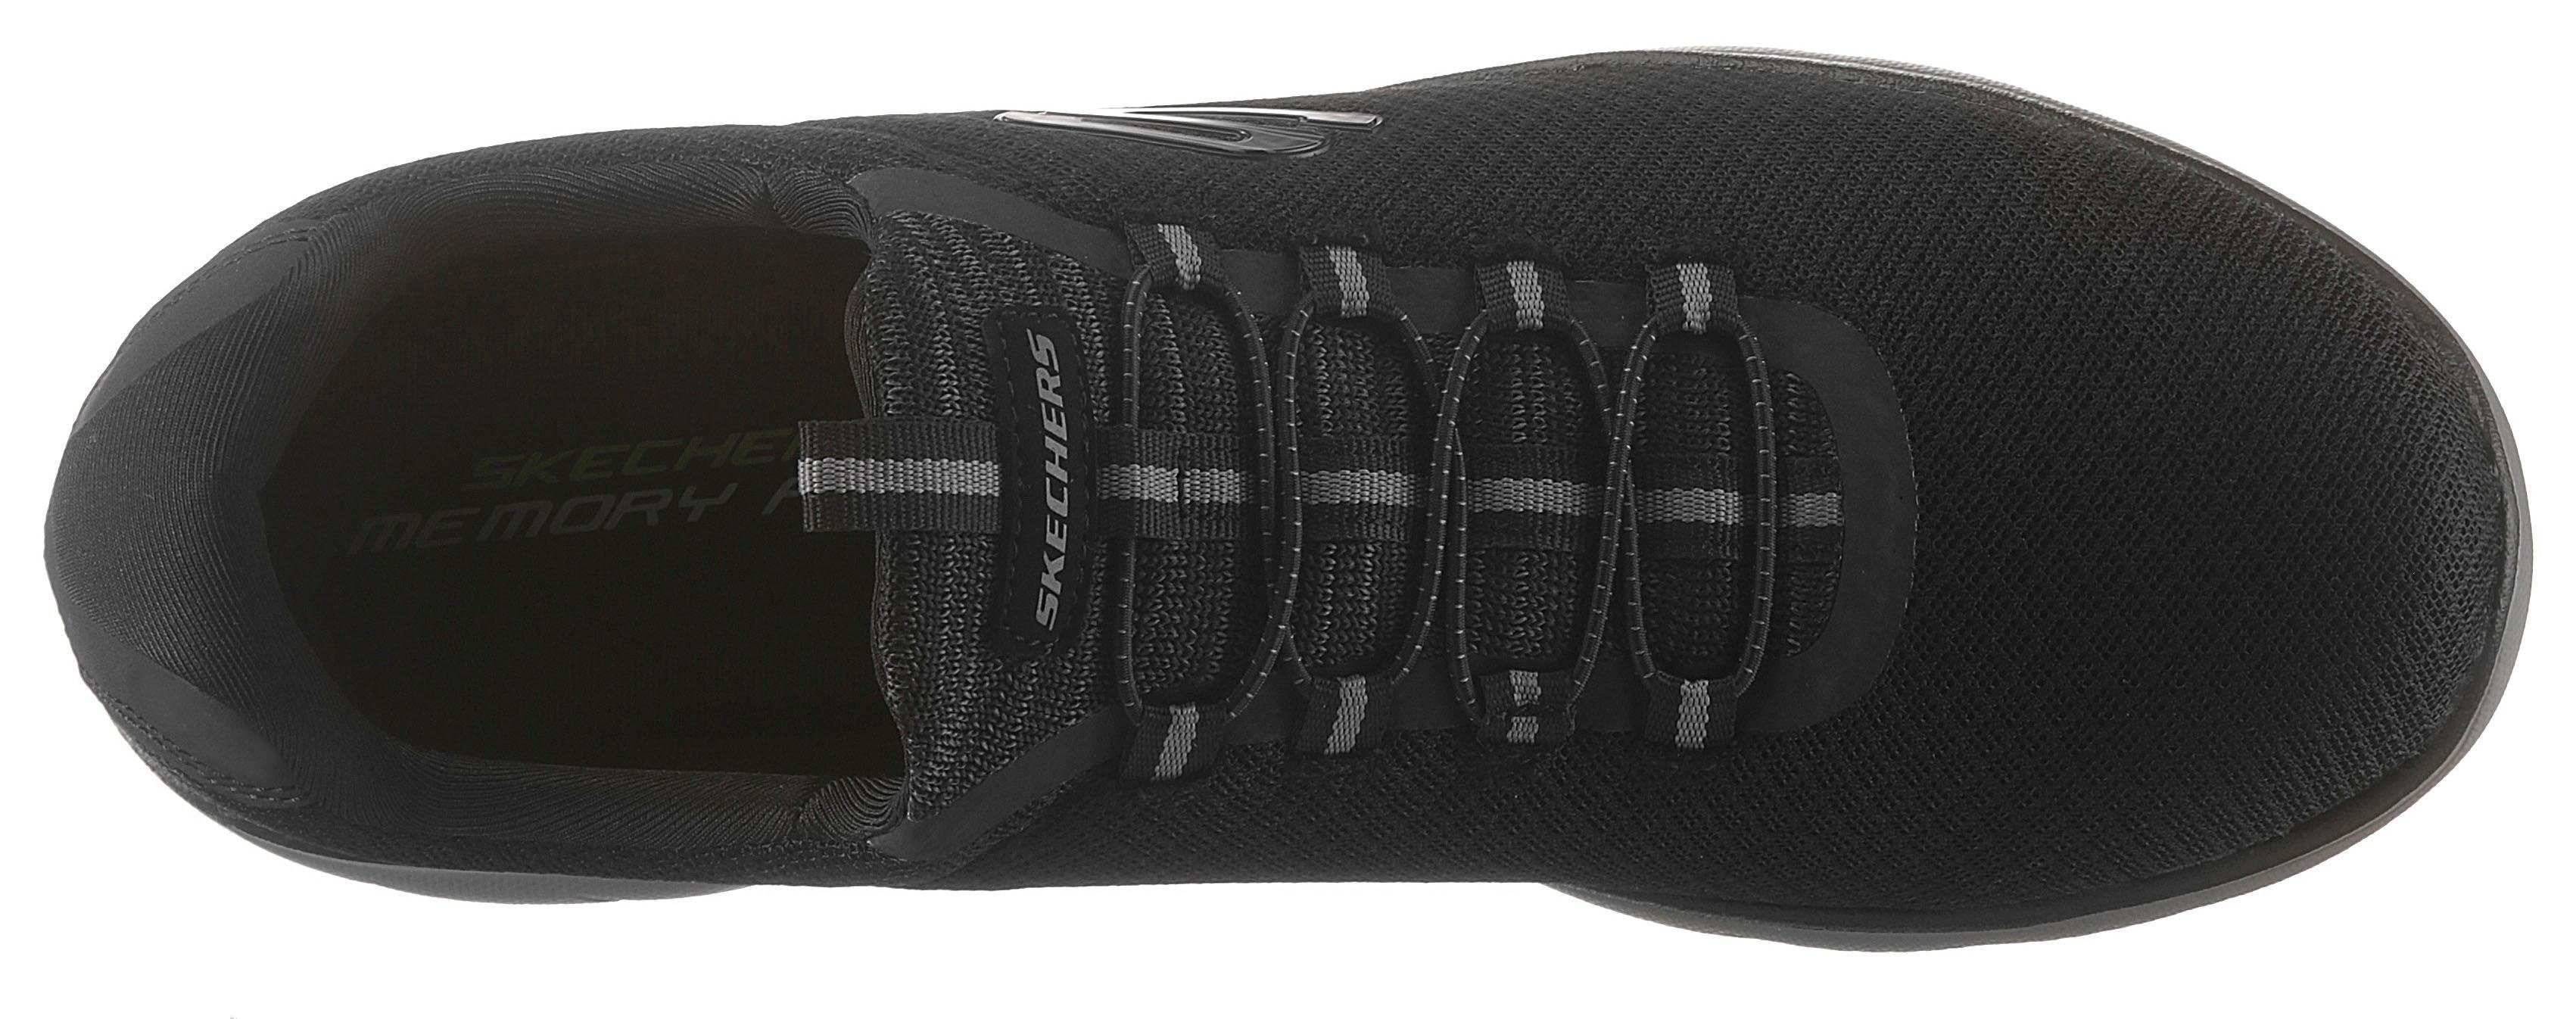 Sneaker Skechers Slip-On mit Summits black/charcoal komfortabler Foam-Ausstattung Memory